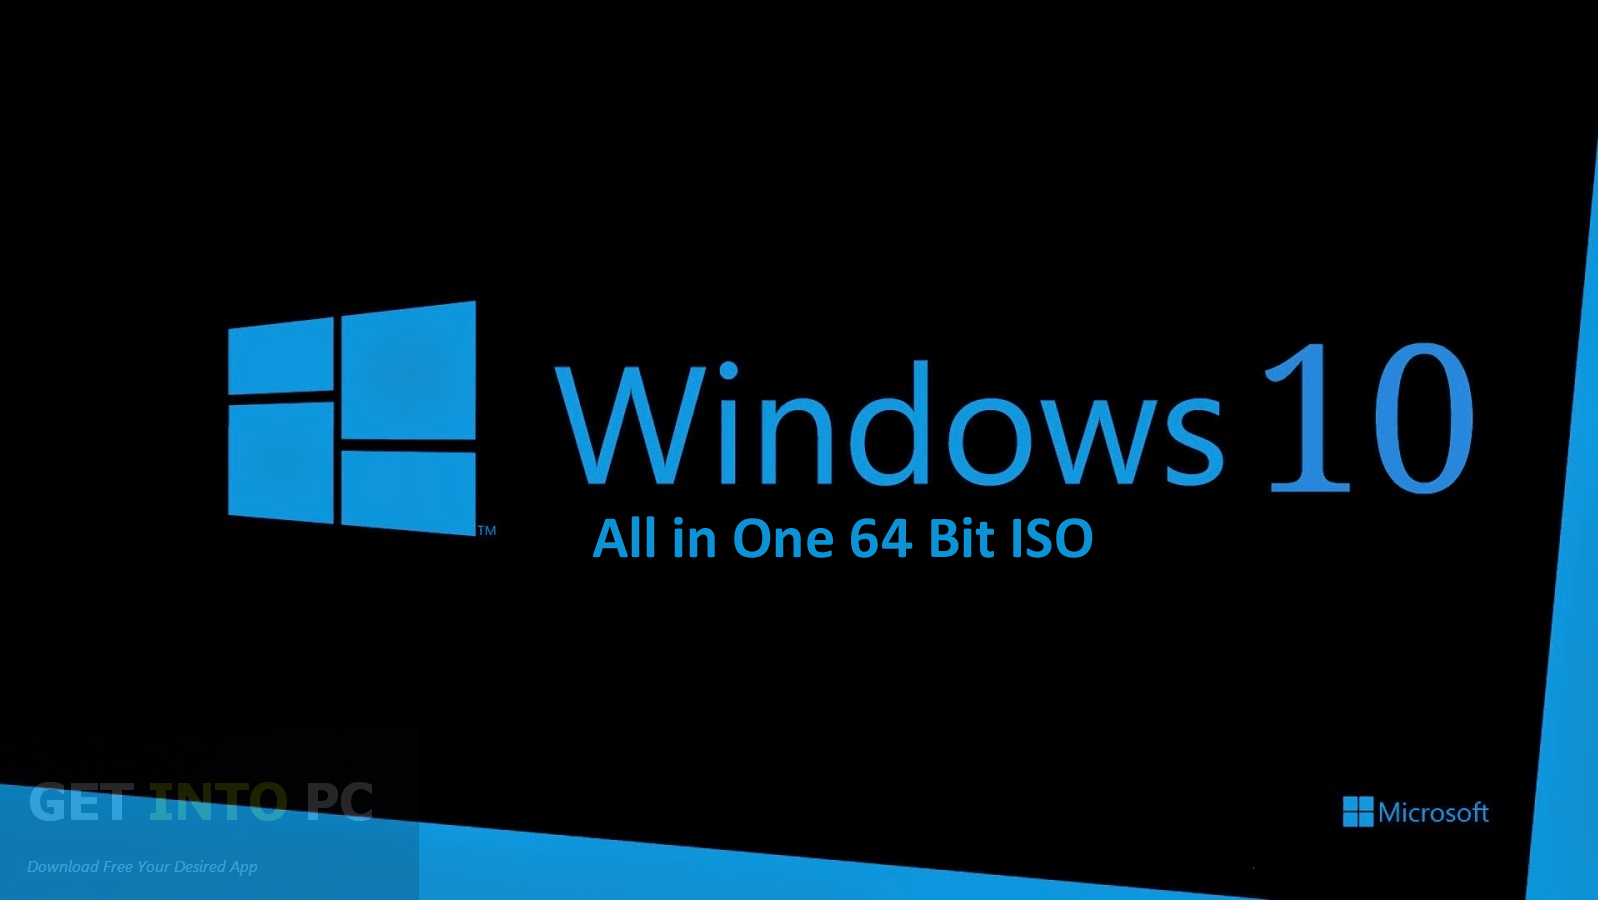 windows 10 pro iso download 64 bit free